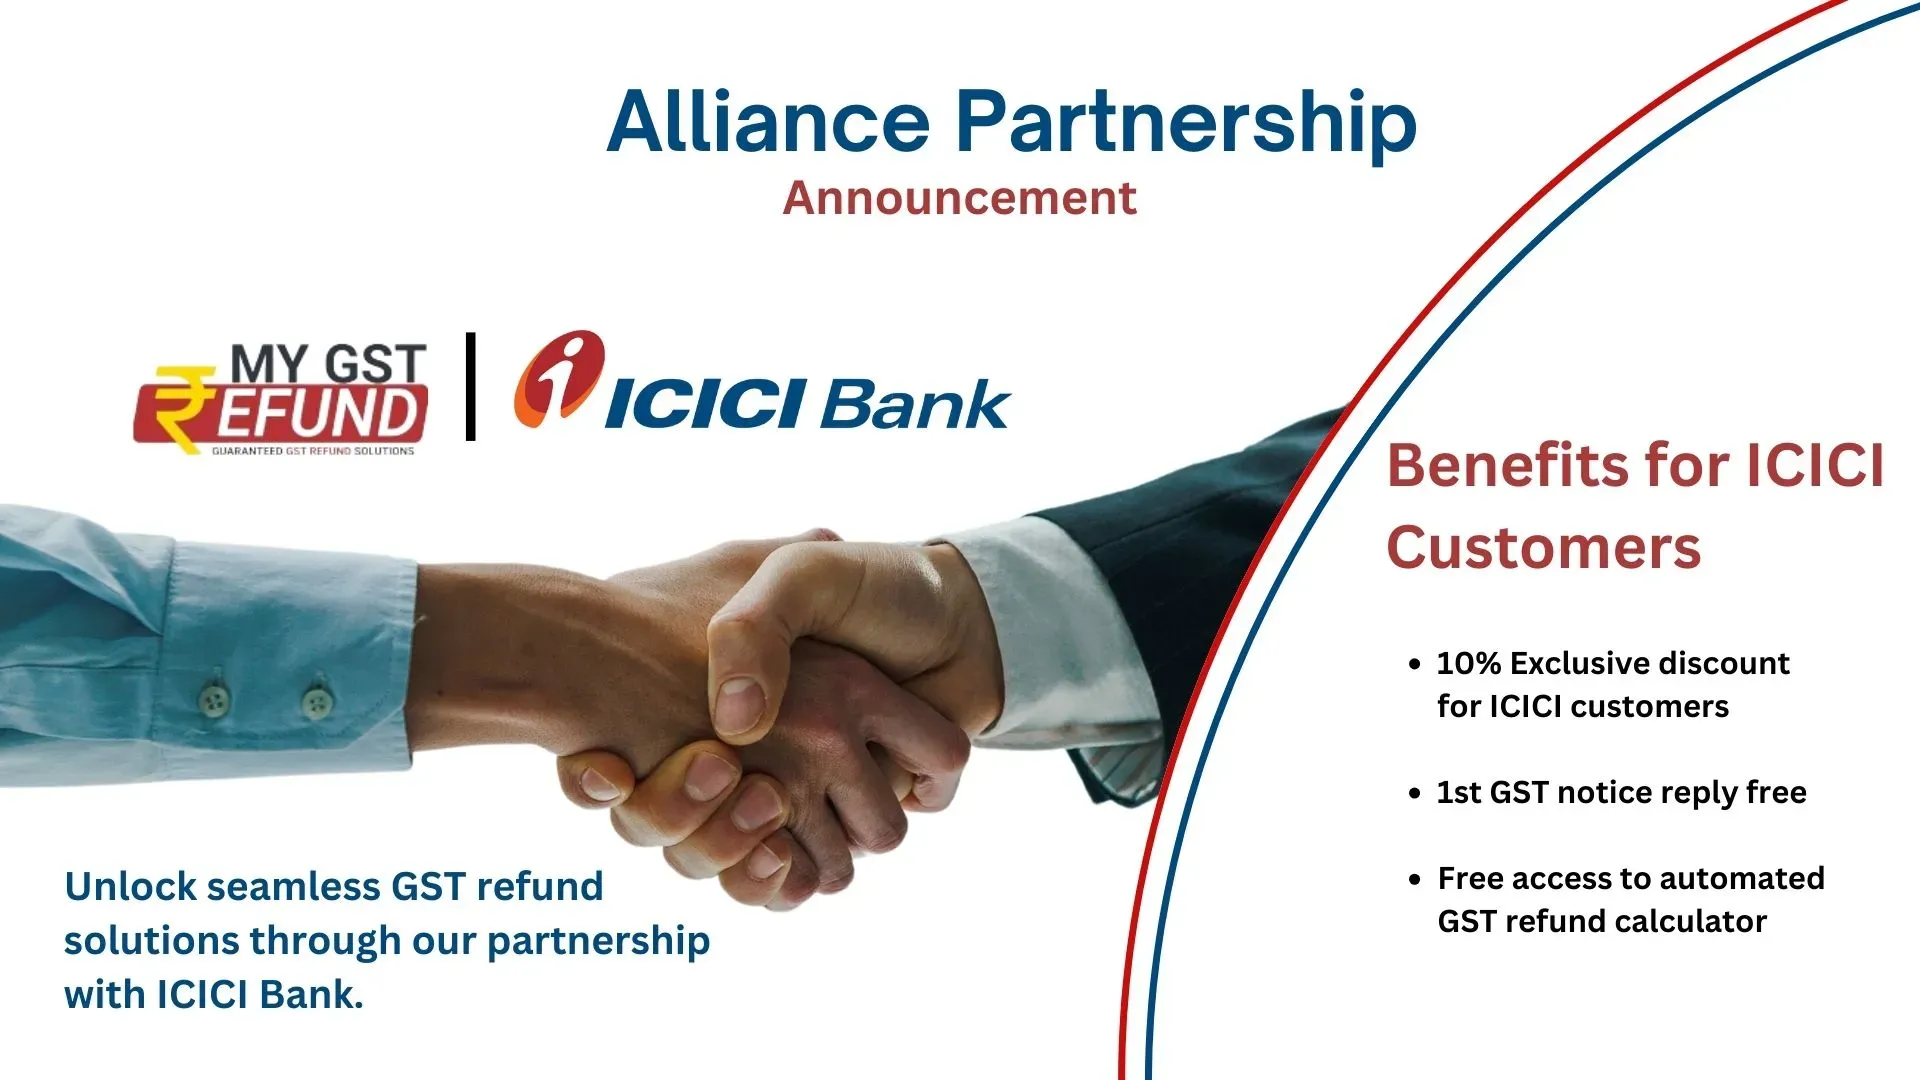 MyGST Refund's Partnership with ICICI Bank.